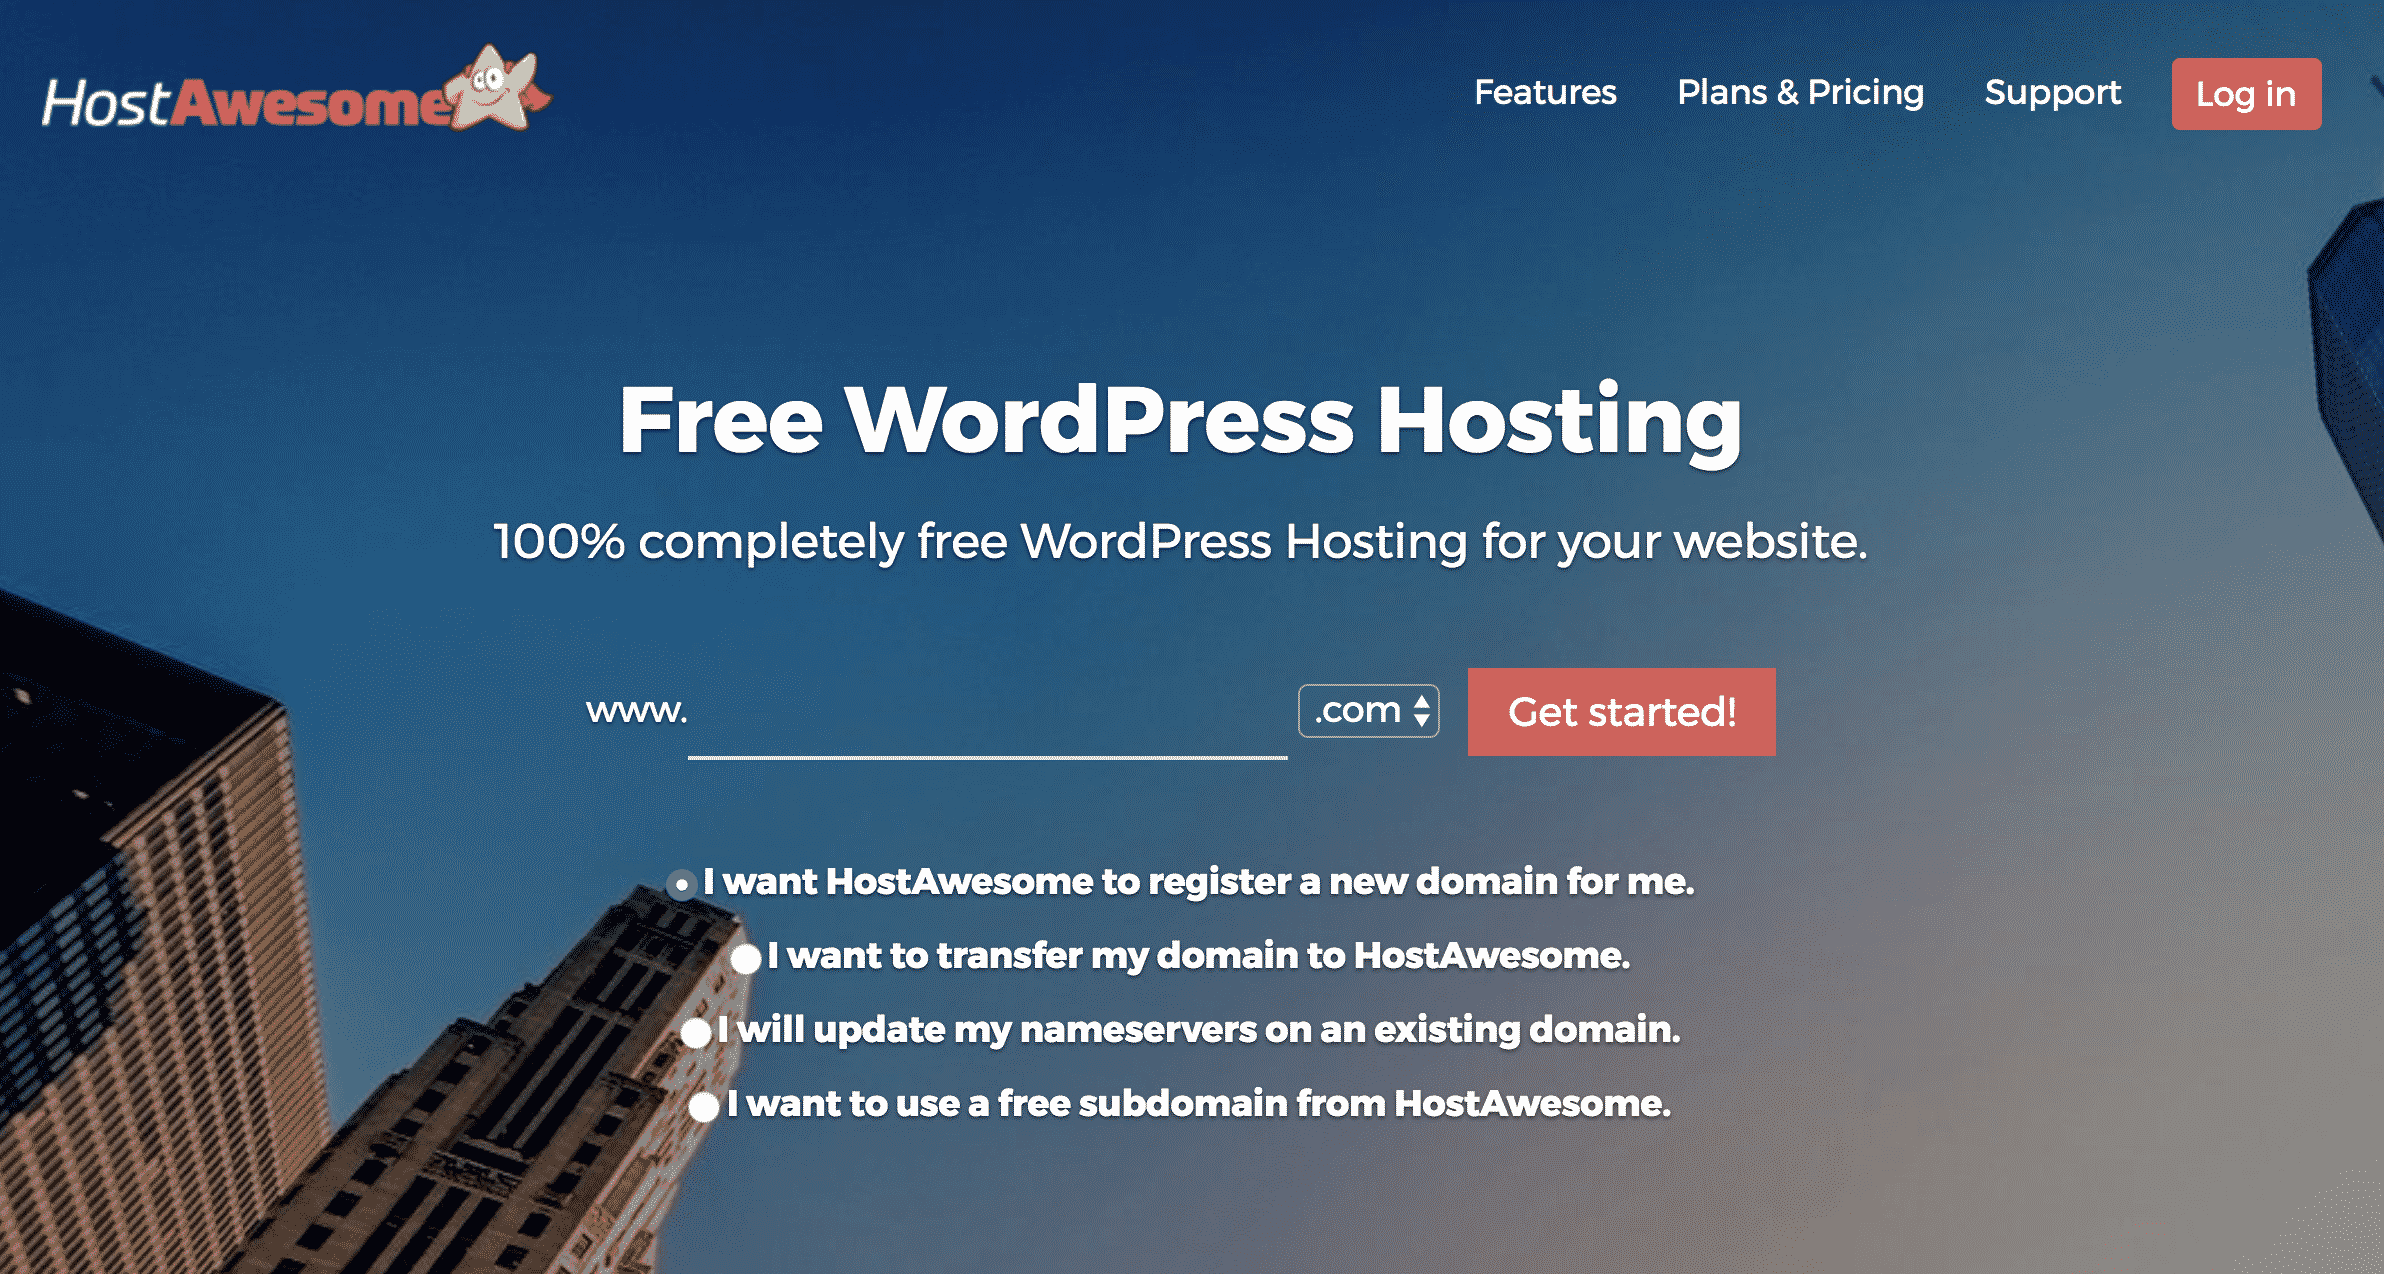 Host Awesome Free WordPress Hosting